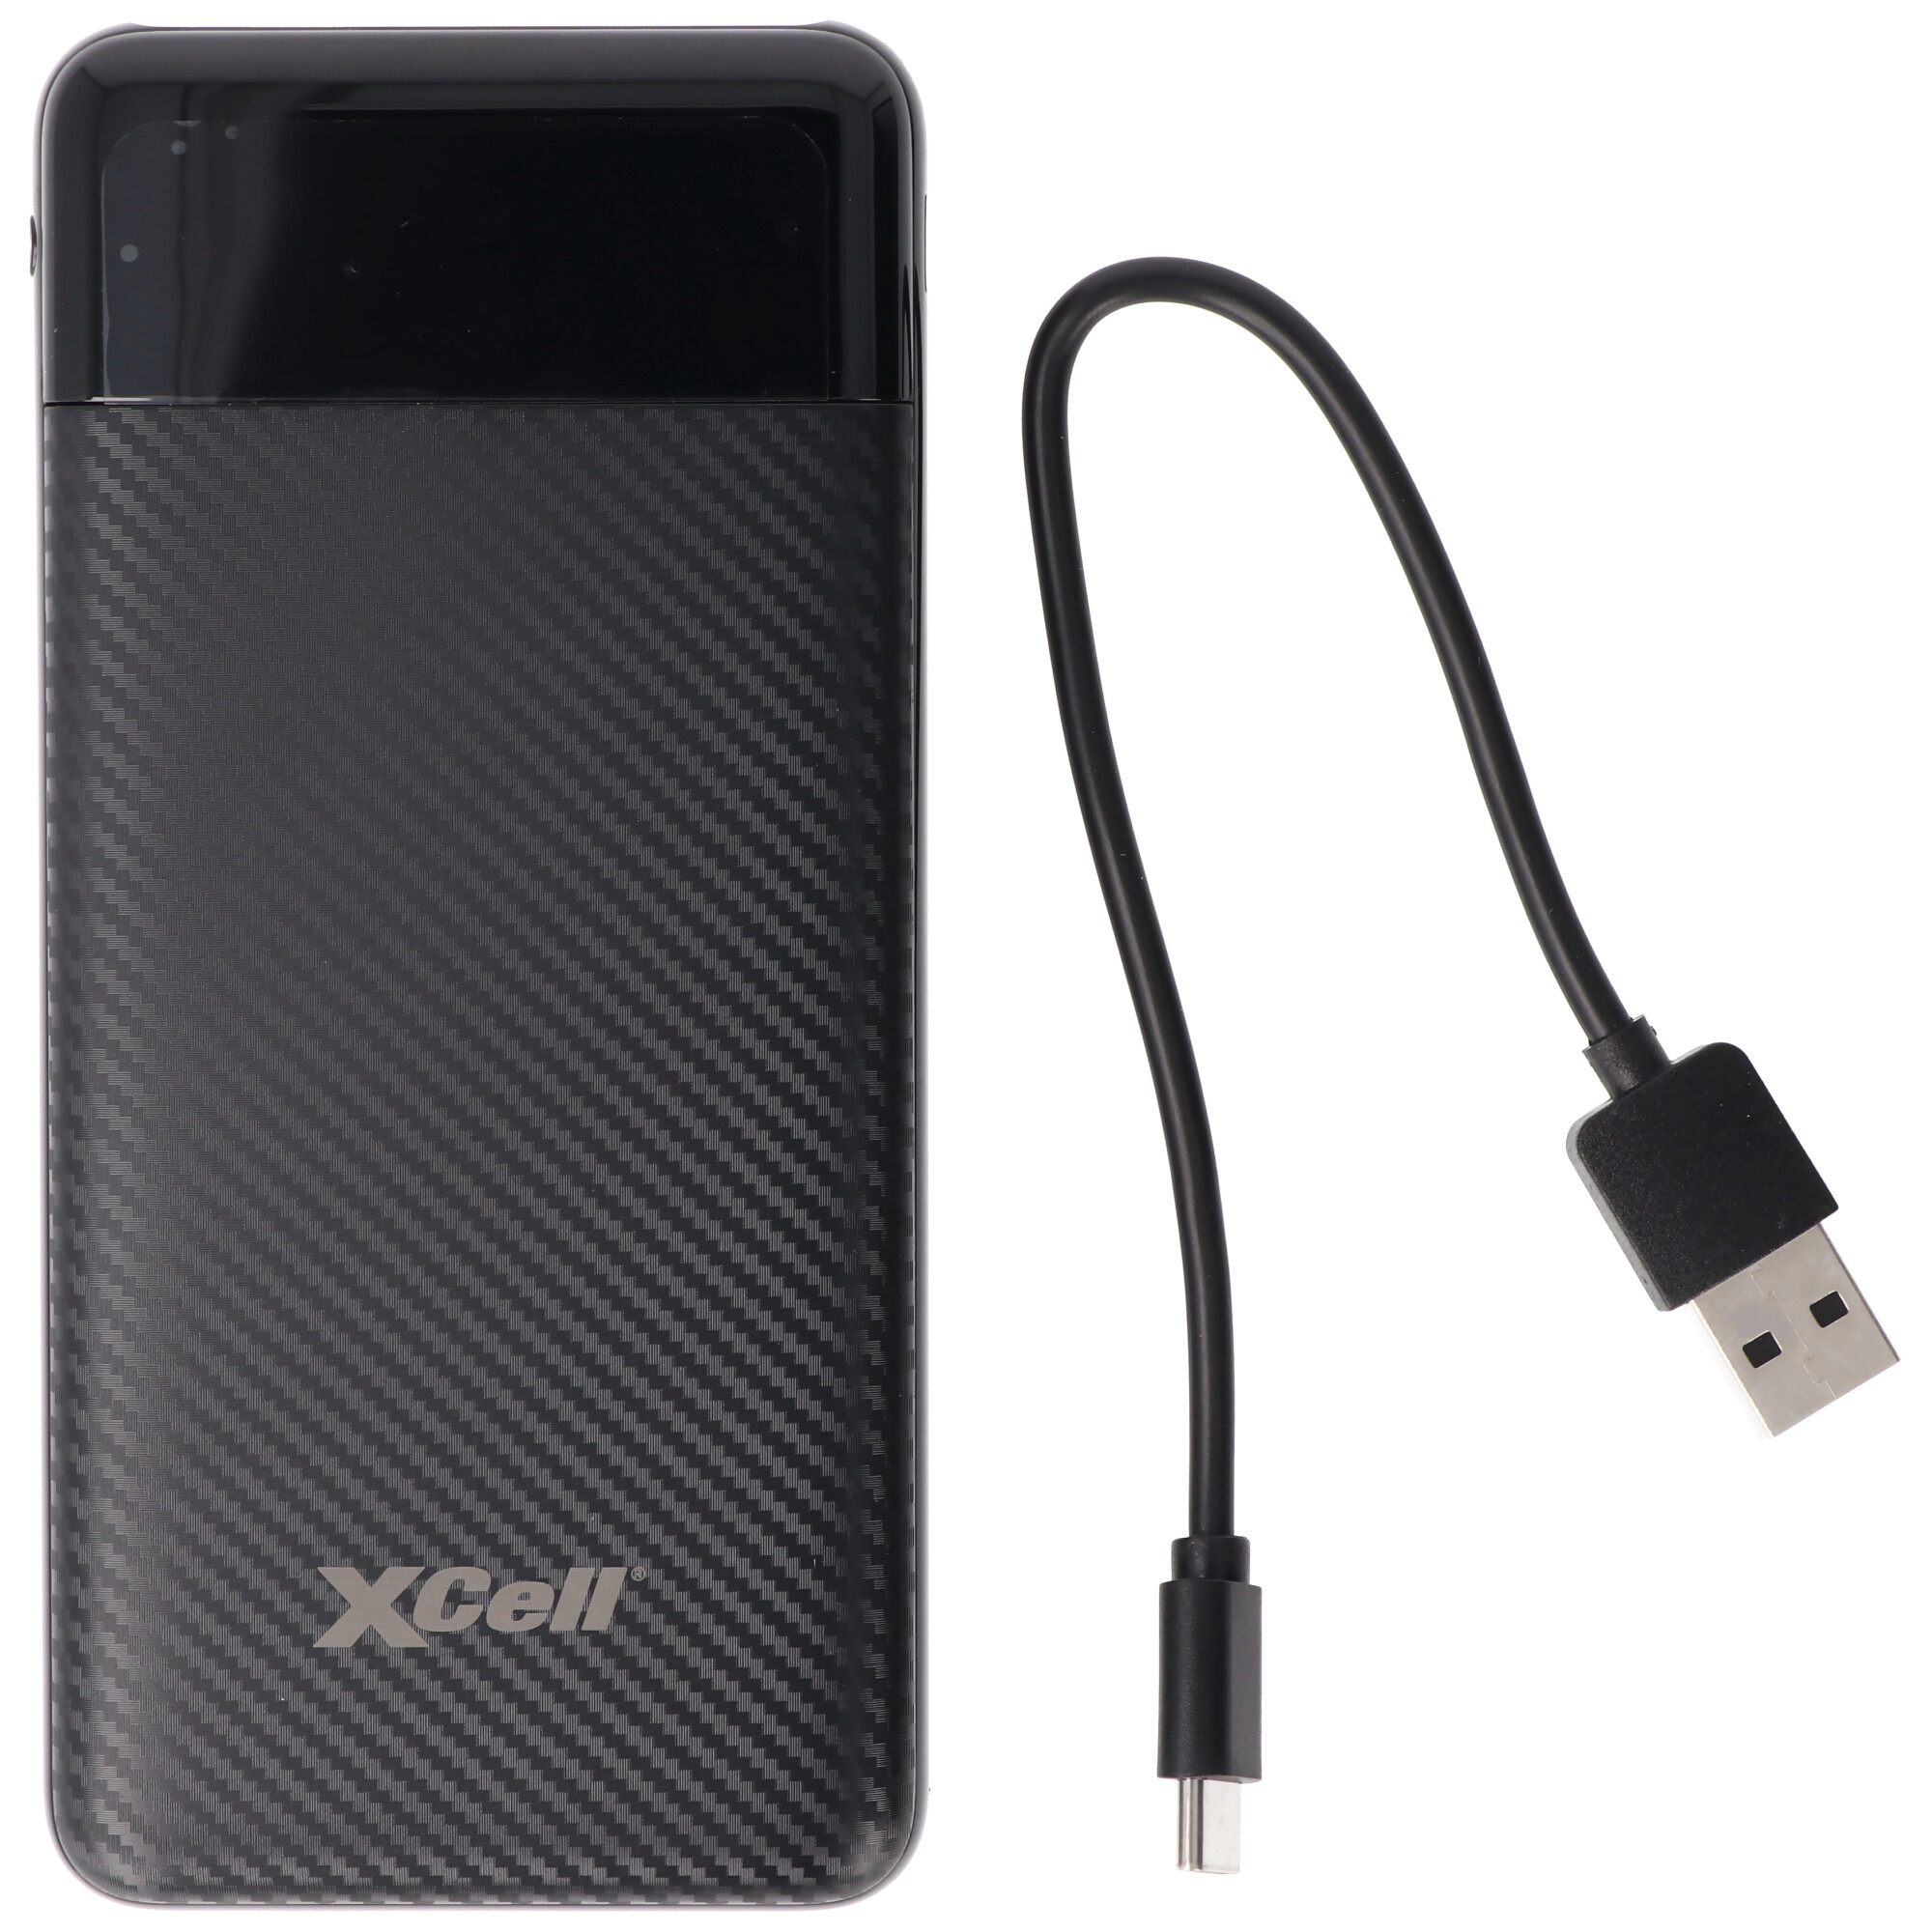 XCell Powerbank X10000 mit 10.000mAh Kapazität, schlankes Design, LED-Display, zweifacher USB-Ausgang, USB-C Ladeport